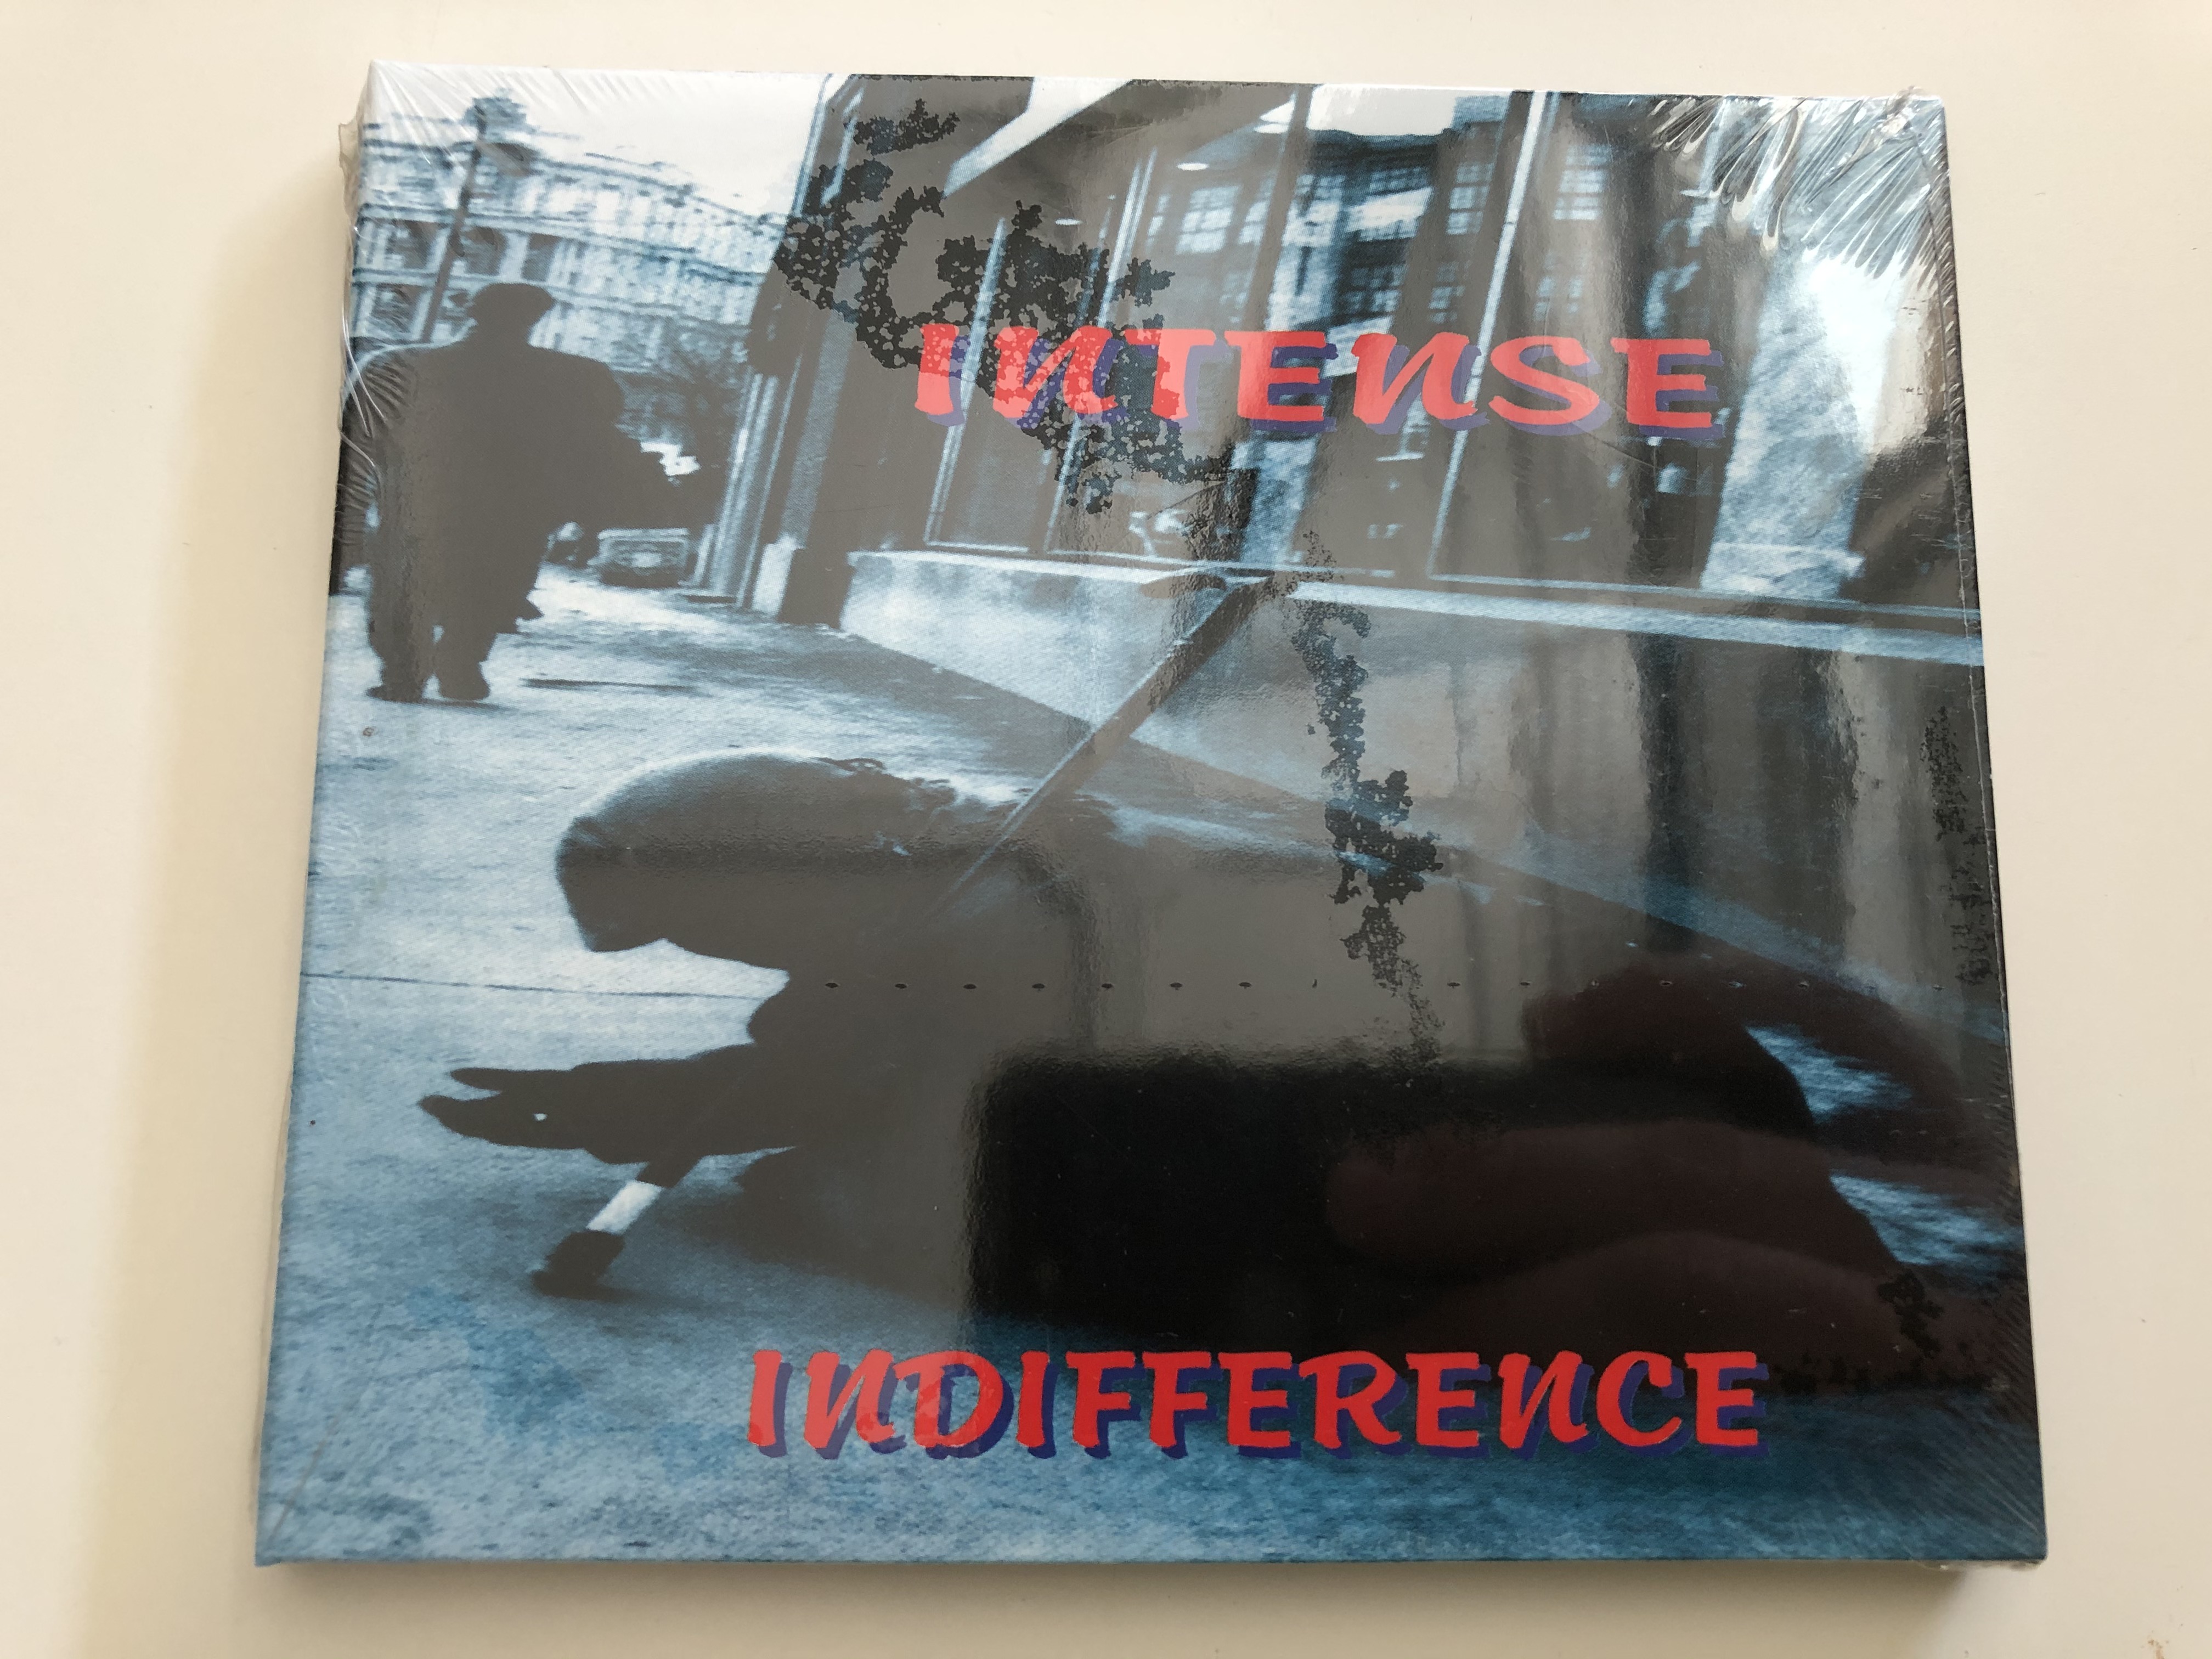 intense-indifference-kosch-vox-records-audio-cd-1996-kv-719464-1-.jpg